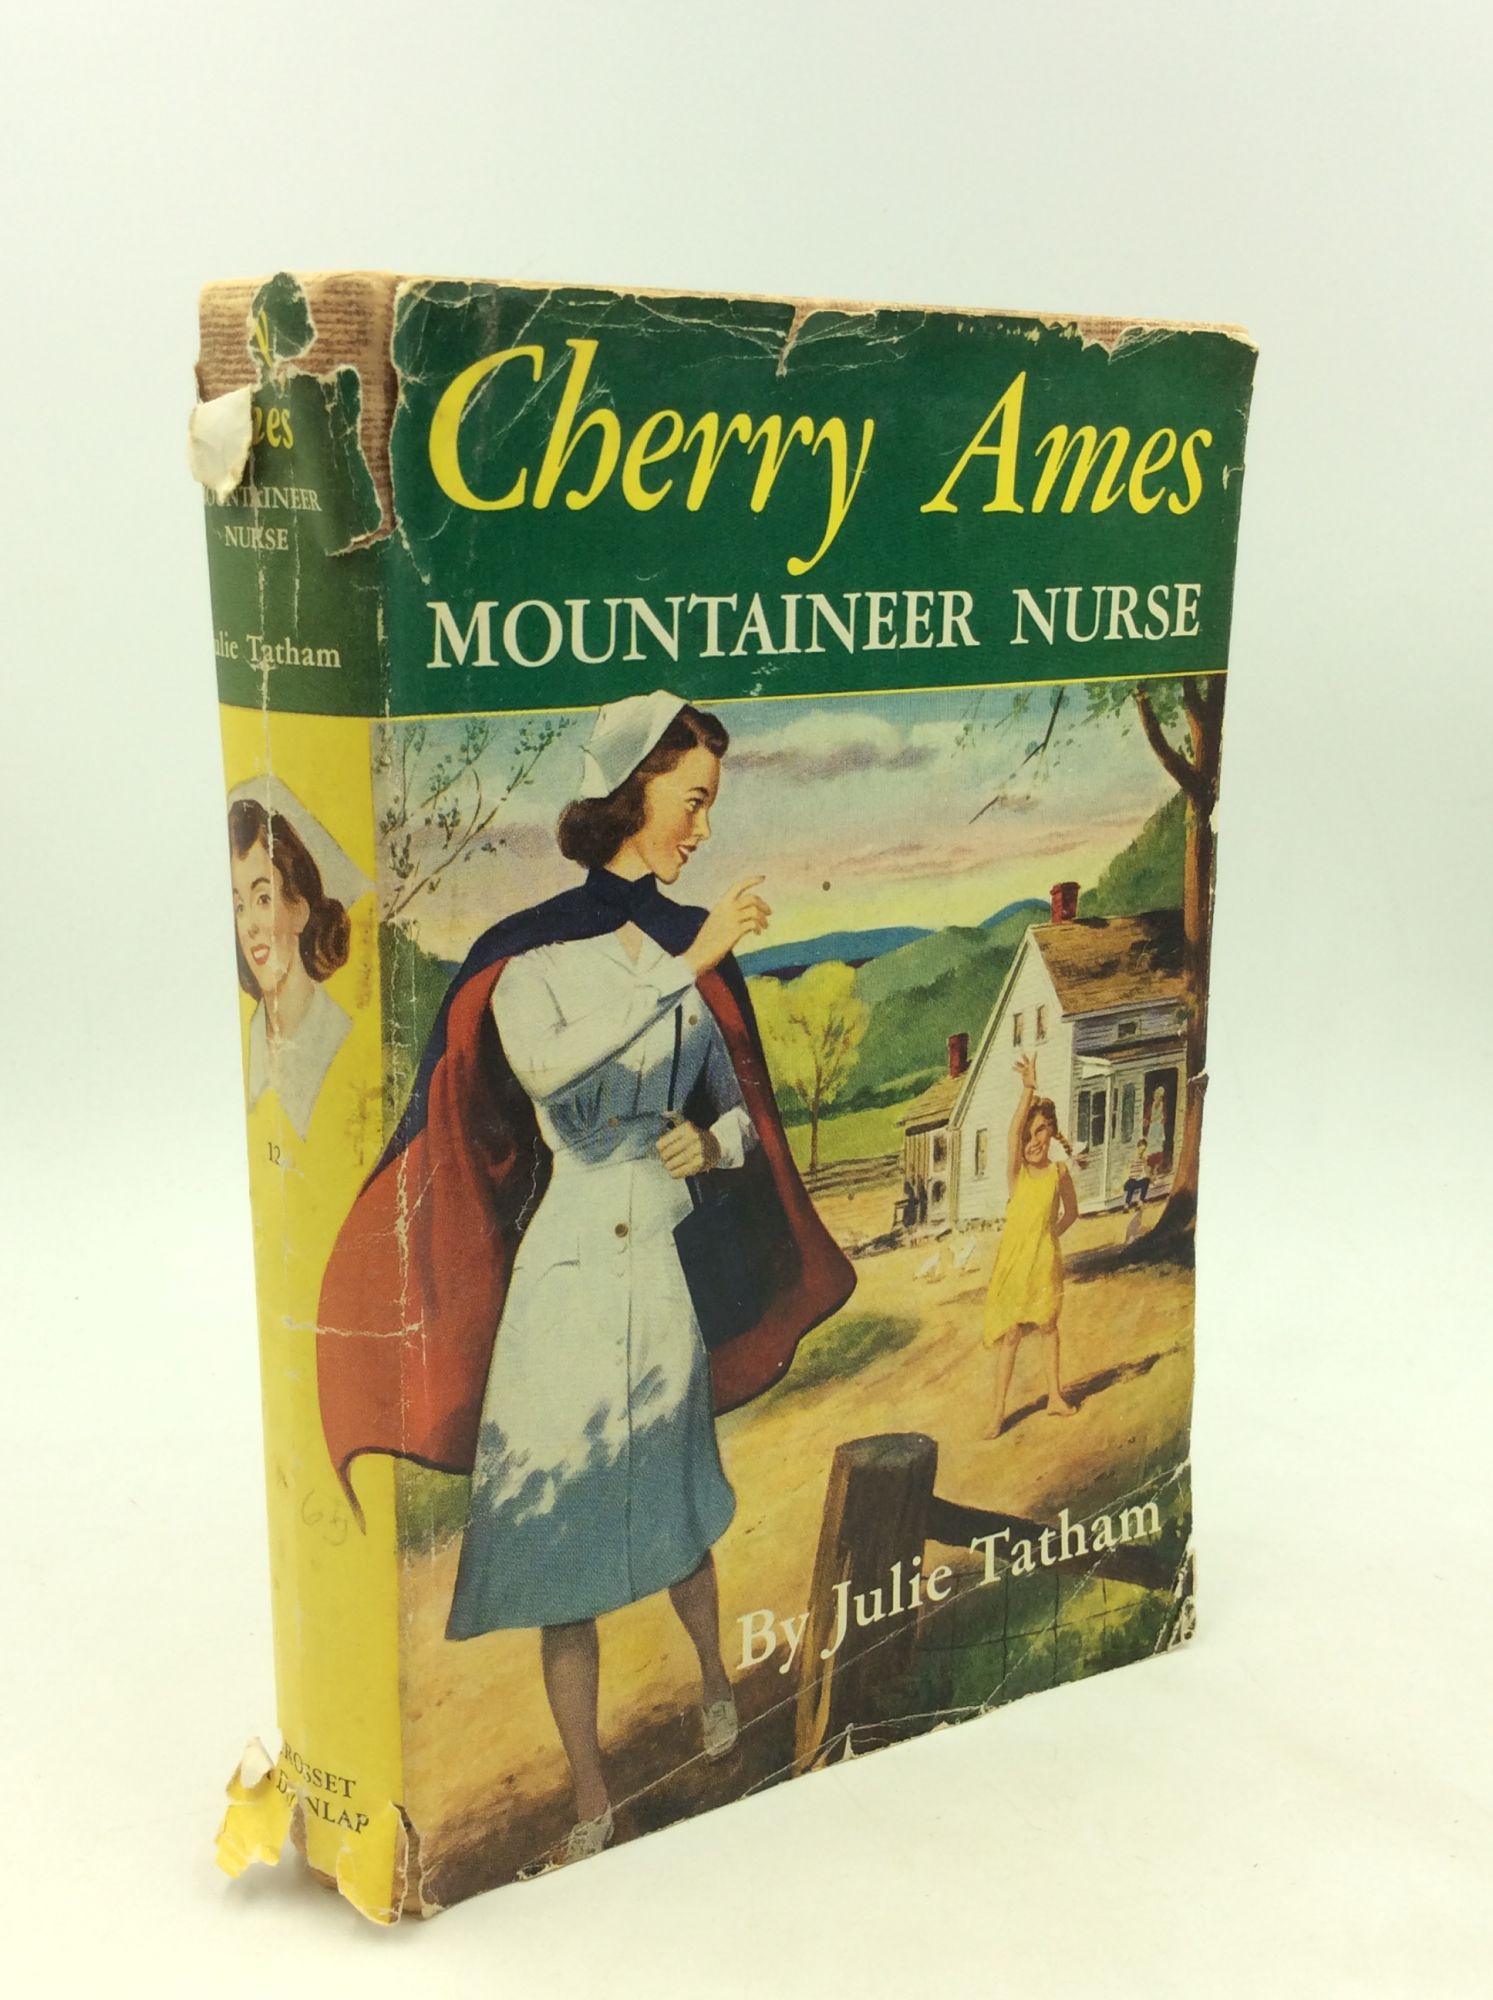 Julie Tatham - Cherry Ames, Mountaineer Nurse